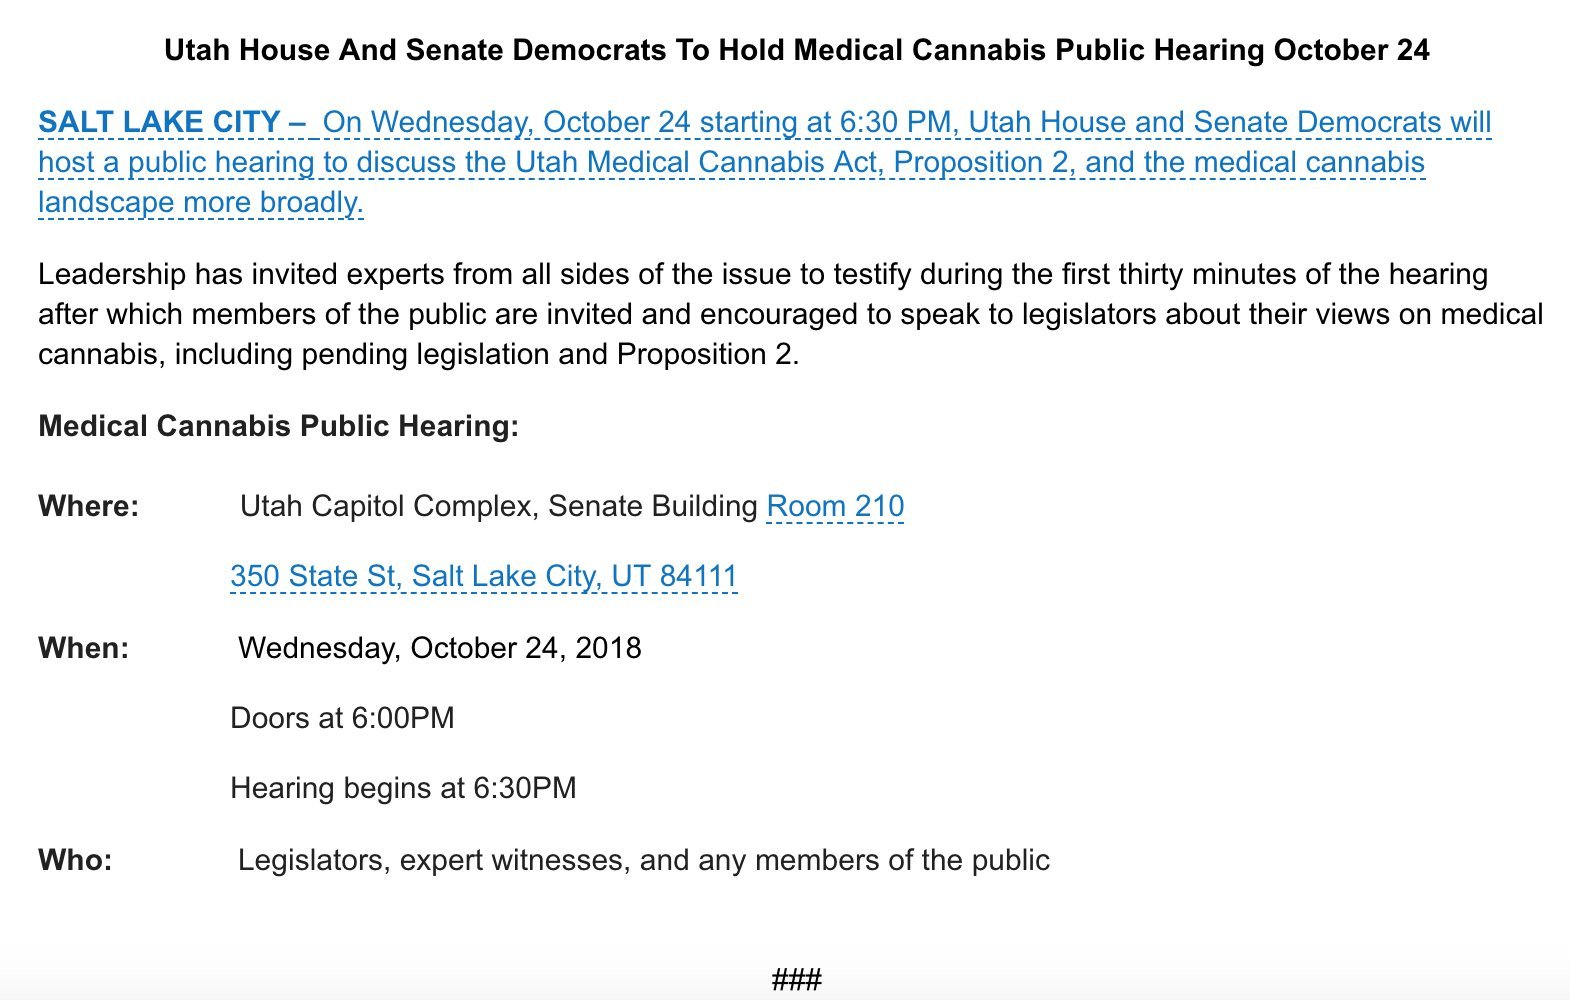 Utah House and Senate Democrats to Hold Medical Marijuana Public Hearing October 24